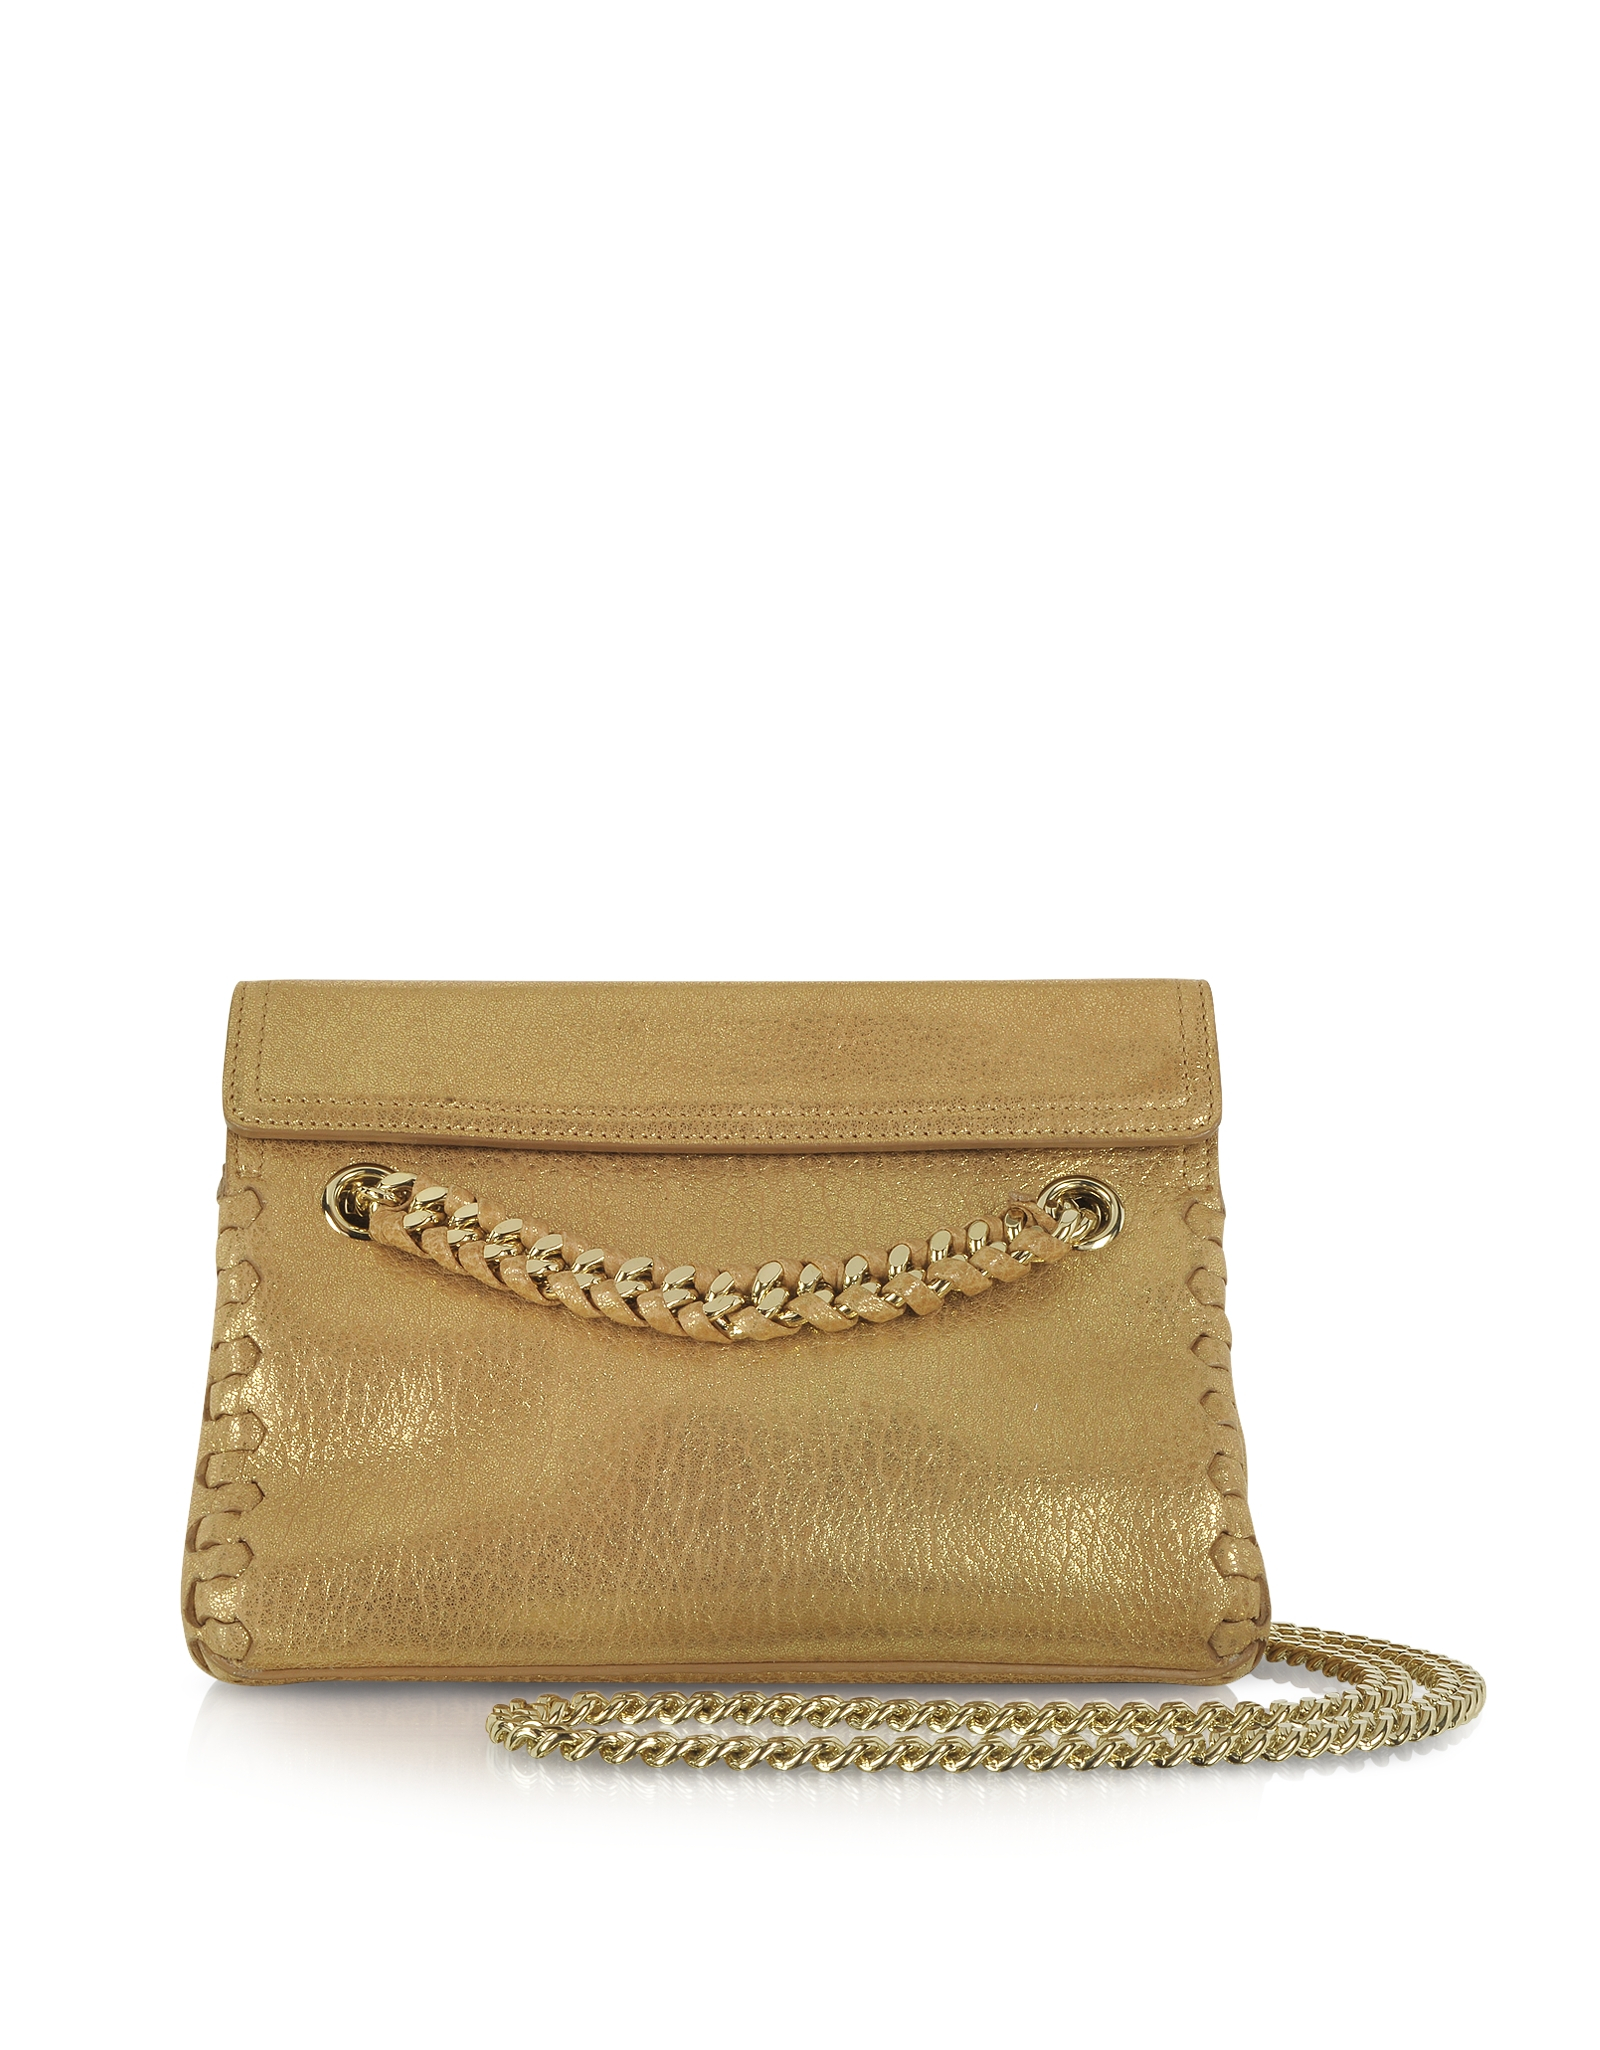 Roberto cavalli Gold Laminated Leather Crossbody Bag W/Chain Strap in ...